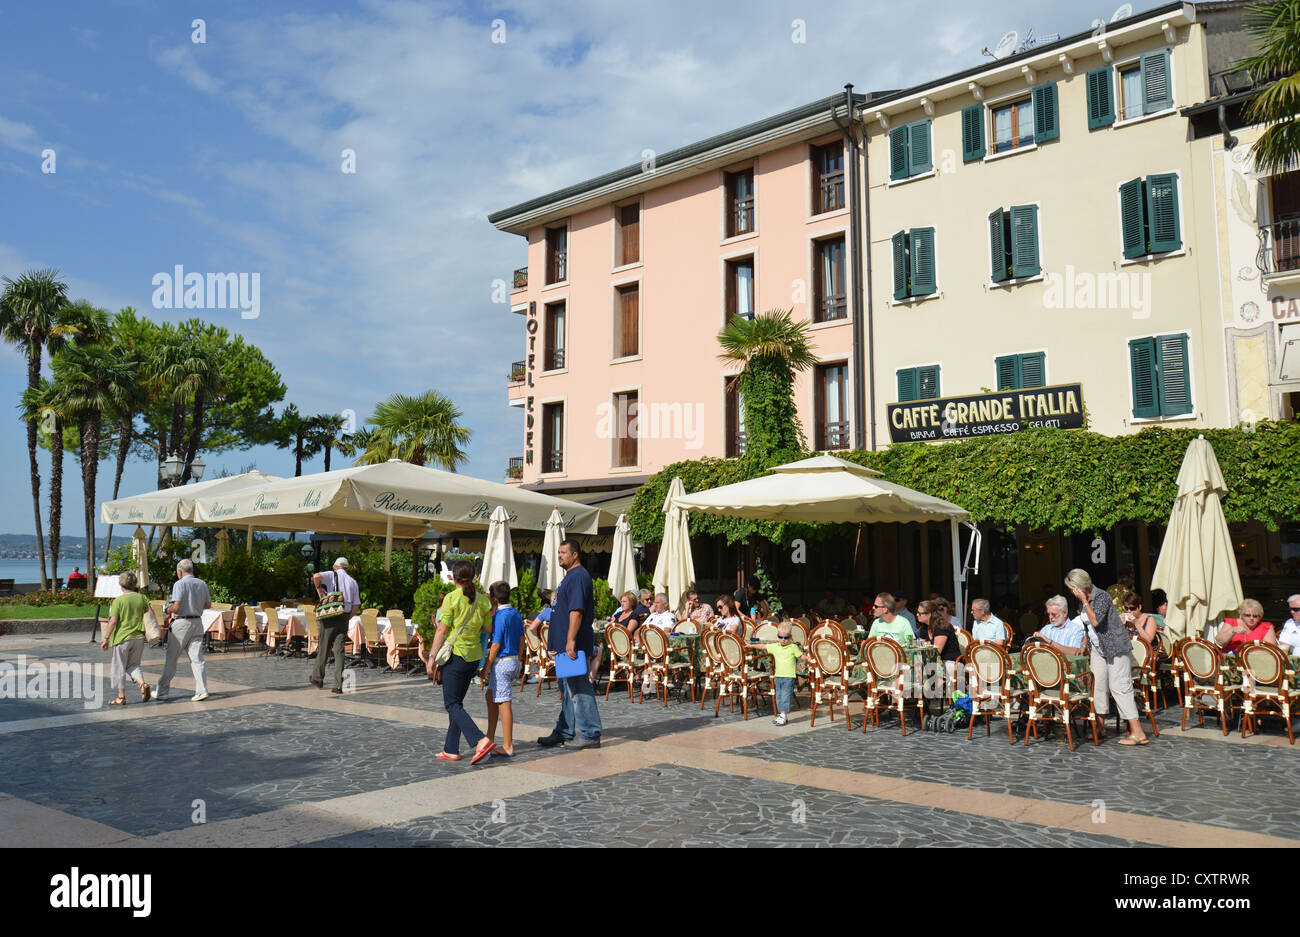 Piazza Carducci, Sirmione, Lake Garda, Province of Brescia, Lombardy Region, Italy Stock Photo